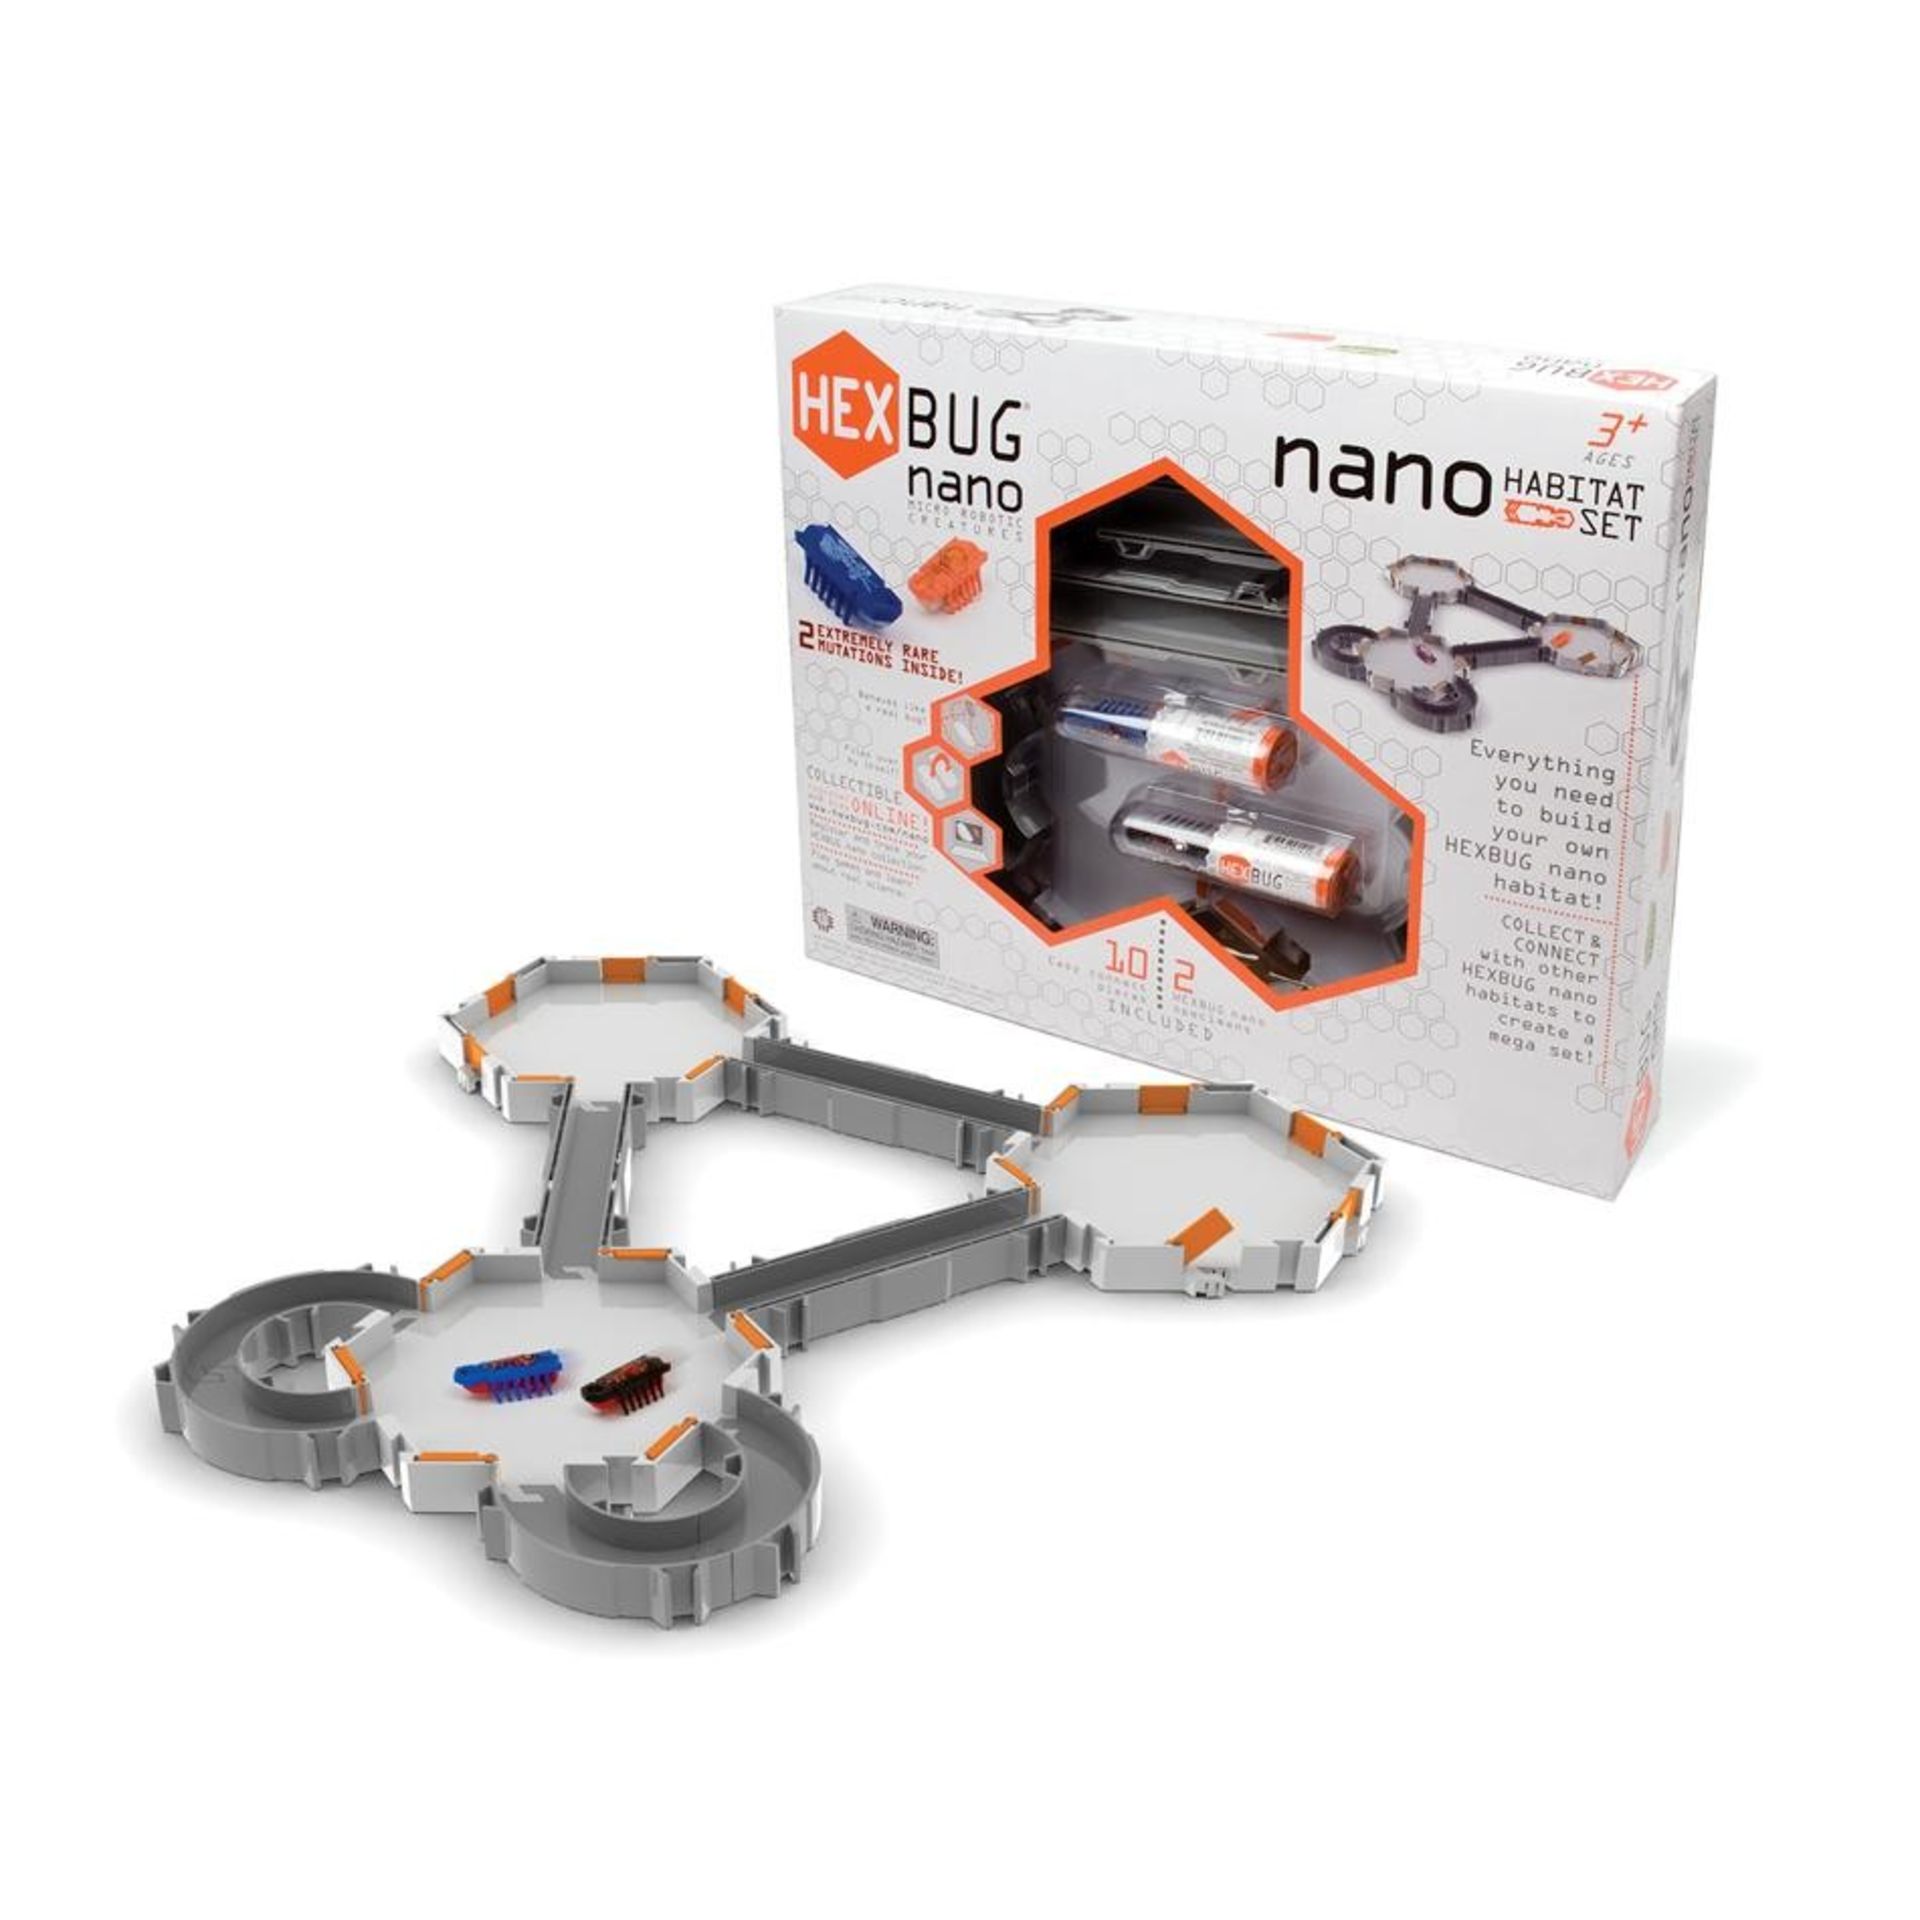 V Brand New Hexbug Nano Micro Robotic Creatures Electronic Habitat Playset ISP - £29.41 Amazon